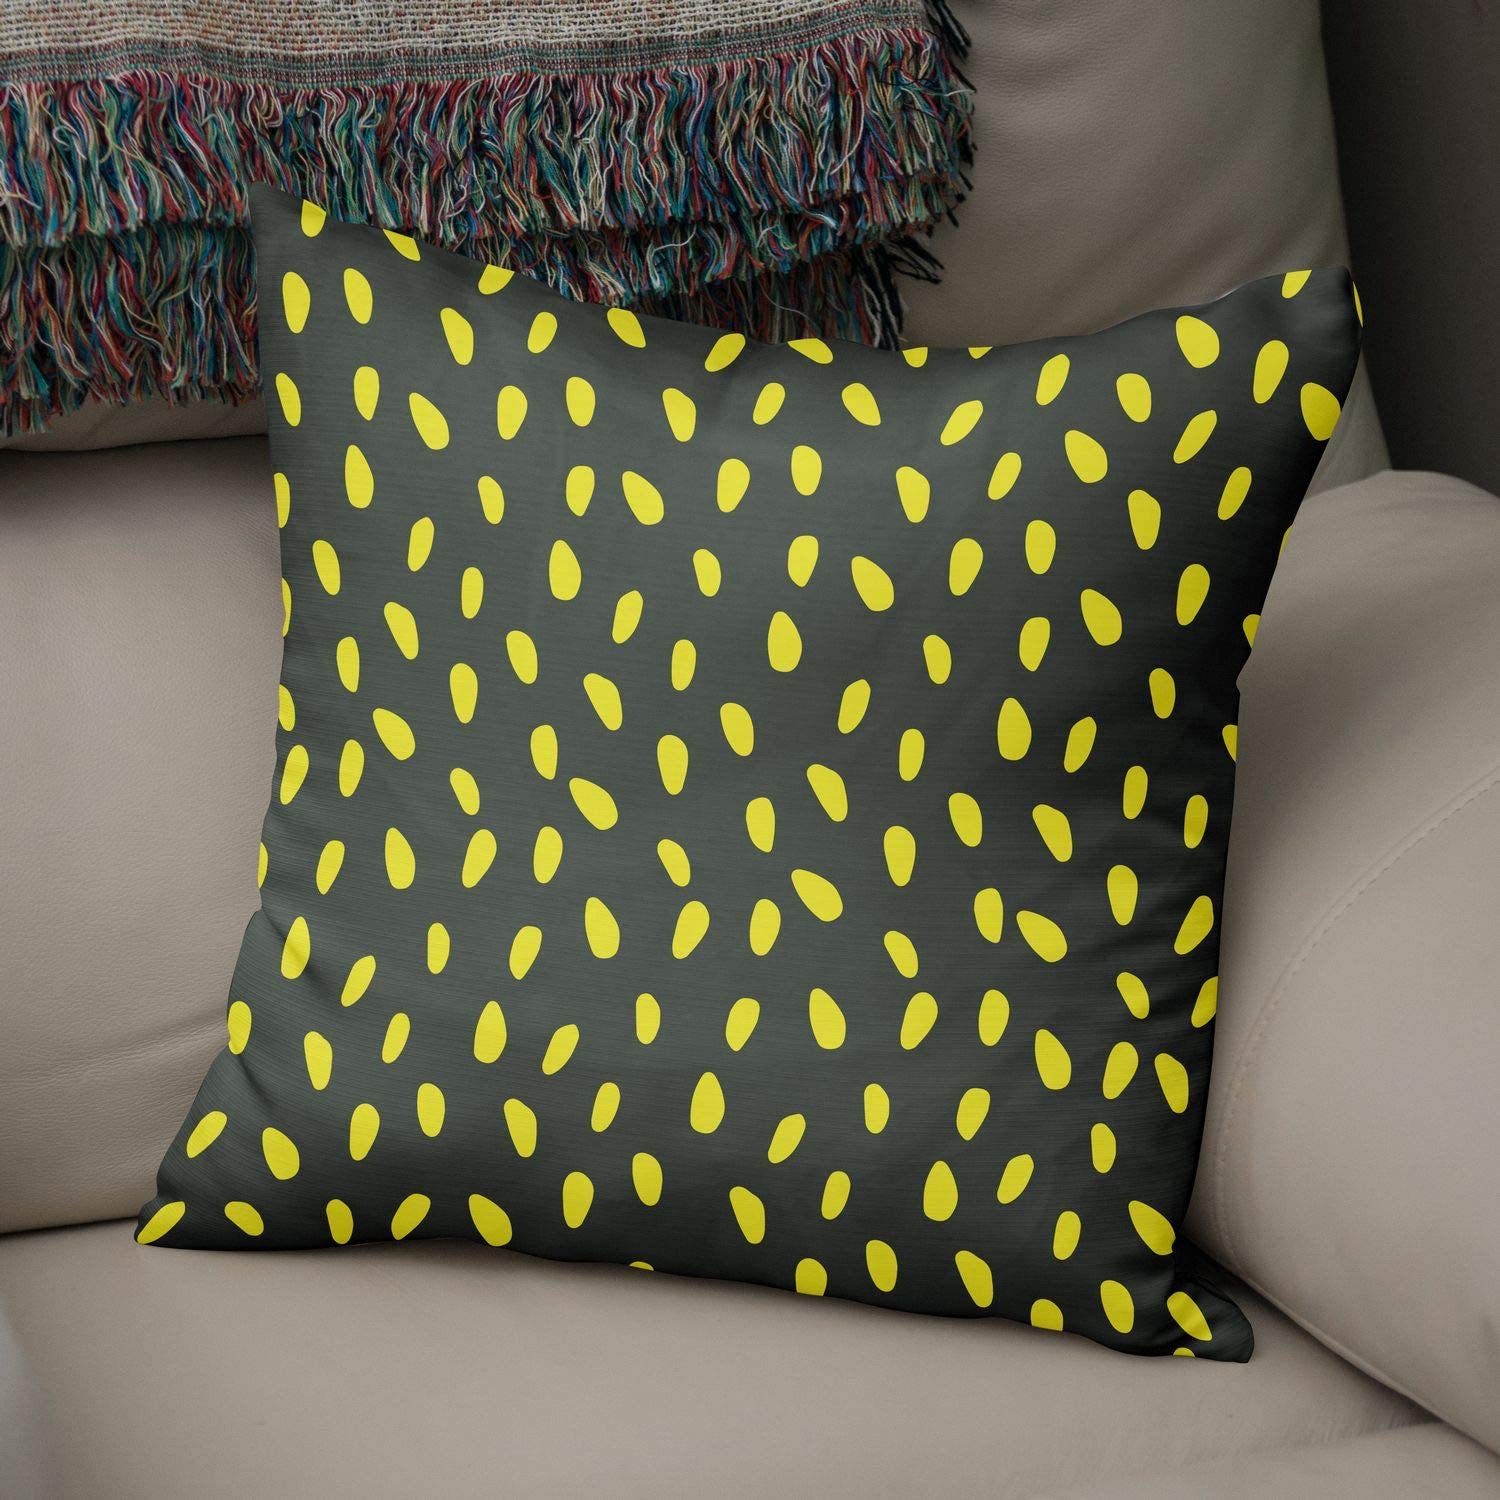 Bonamaison Yellow Spot Design Decorative Green Cushion Cover 43 x 43cm RRP 7.64 CLEARANCE XL 4.99